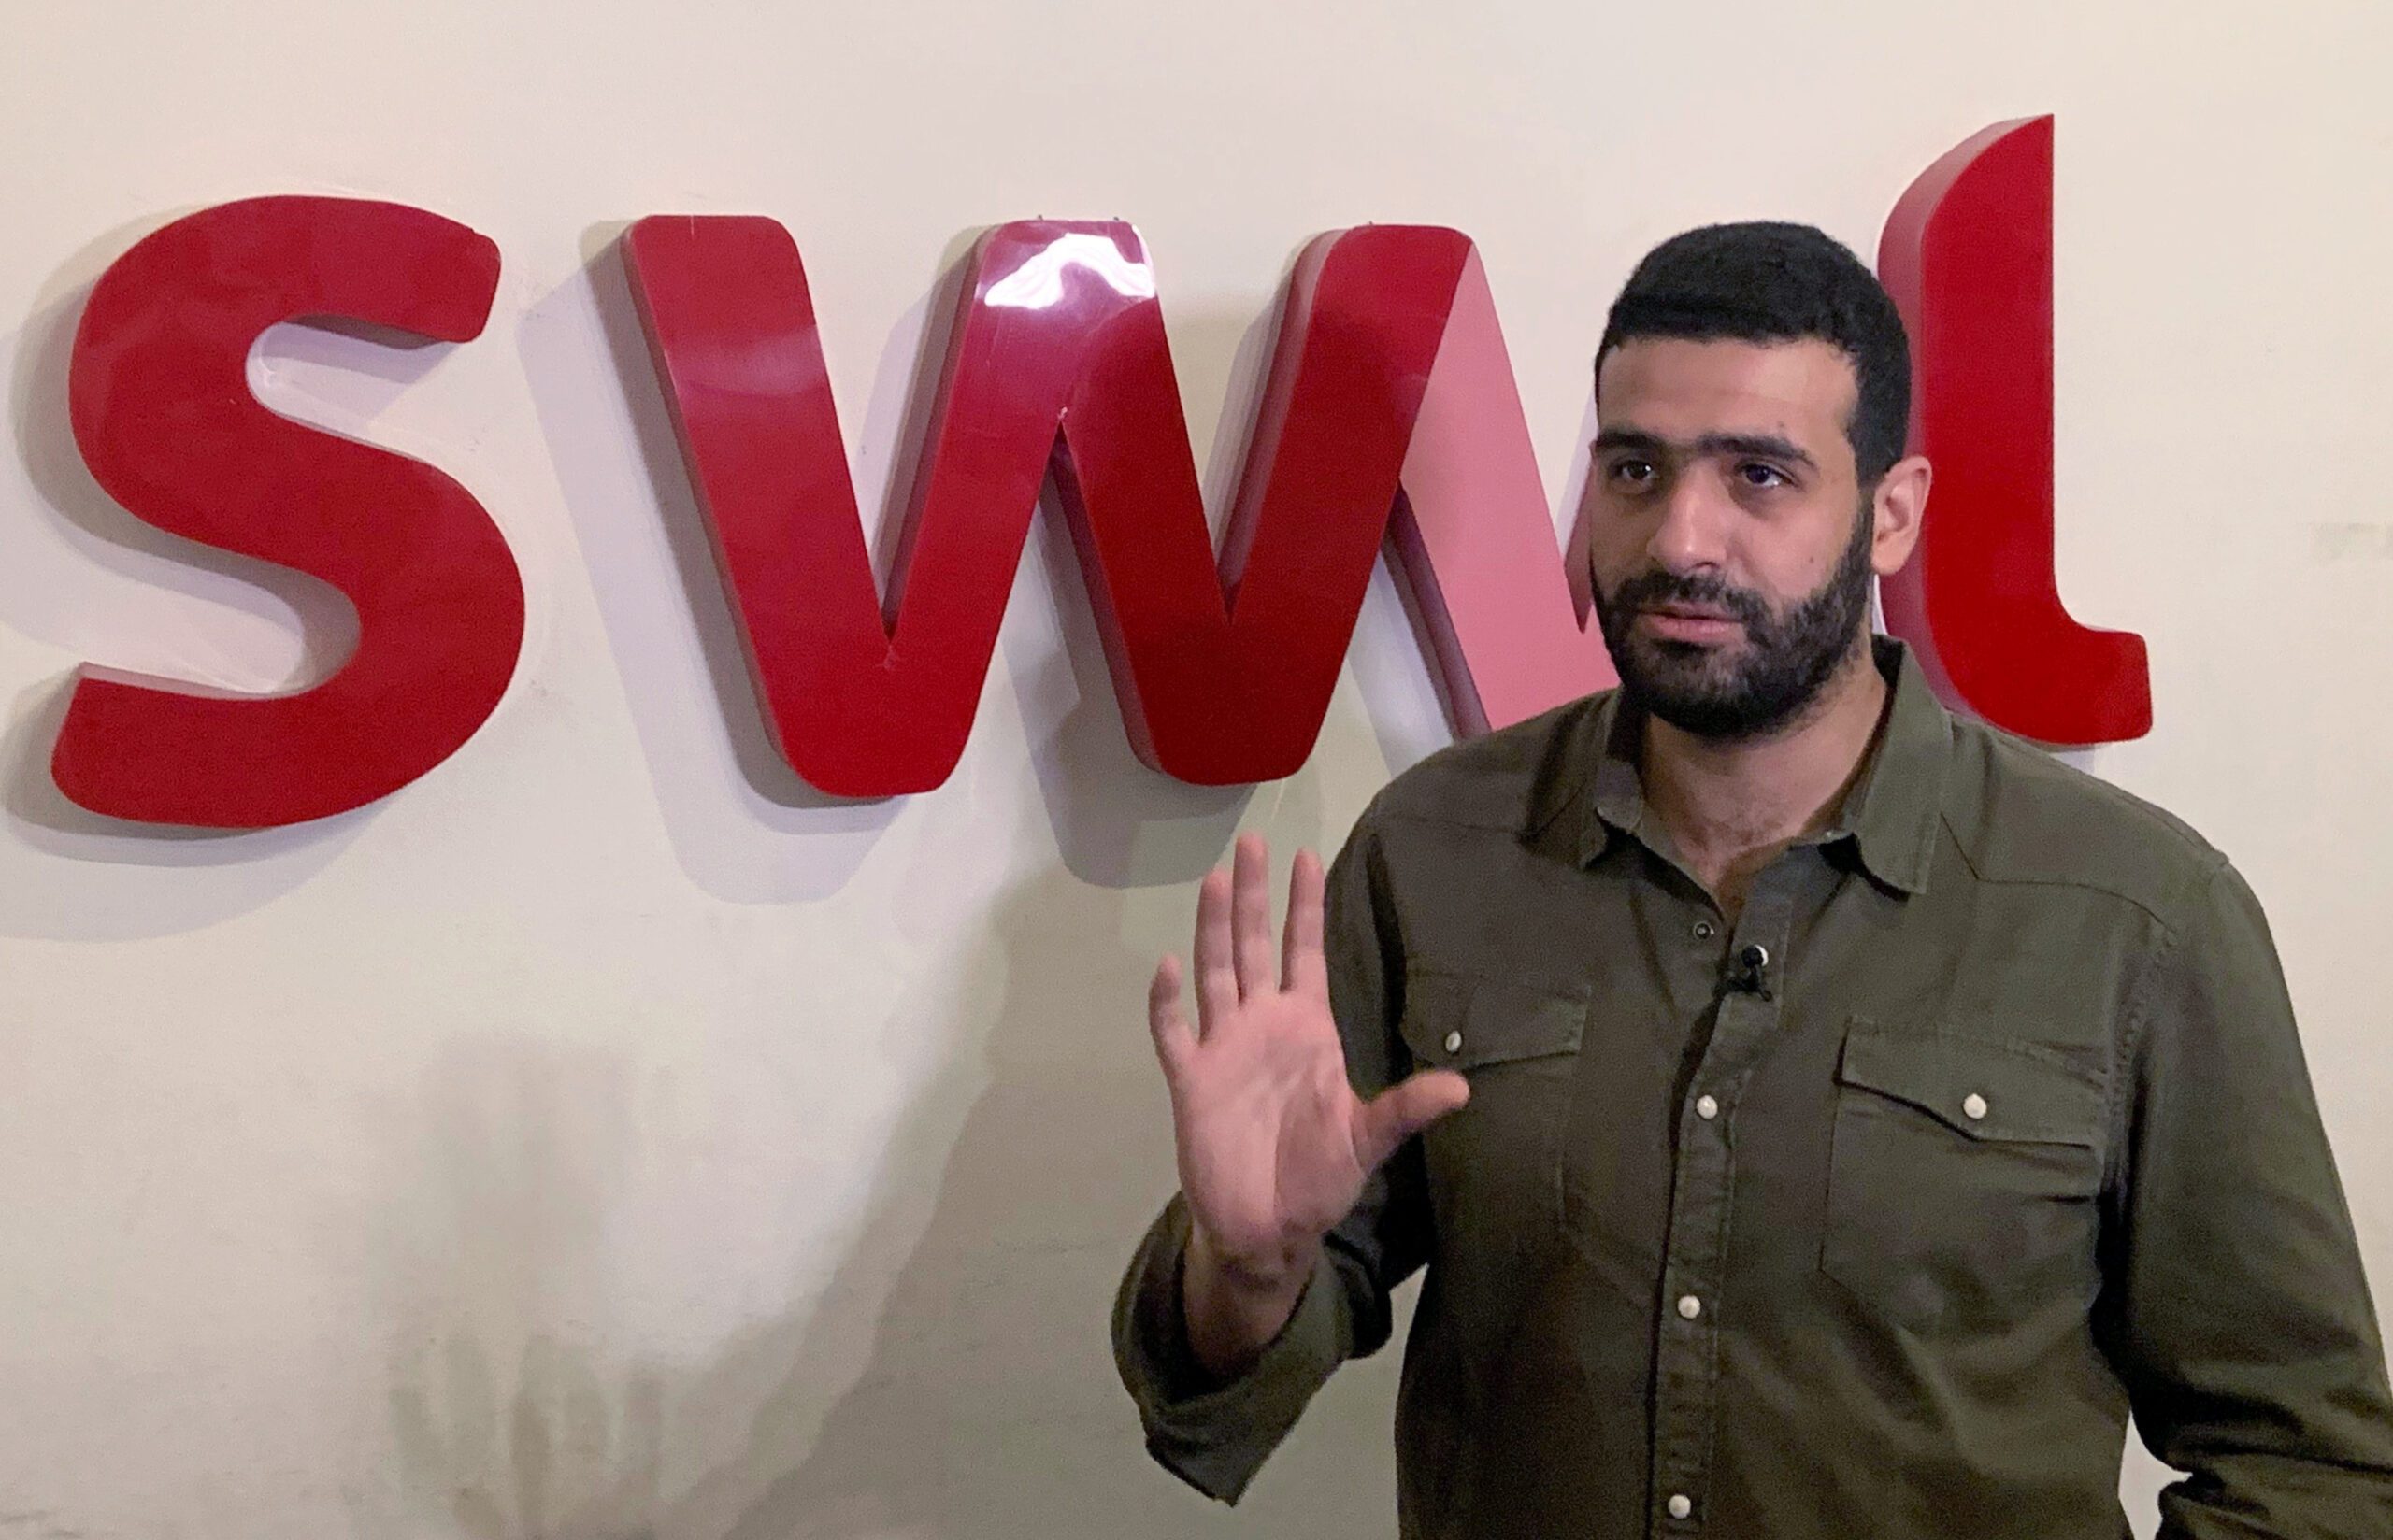 SWVL CEO Mostafa Kandil